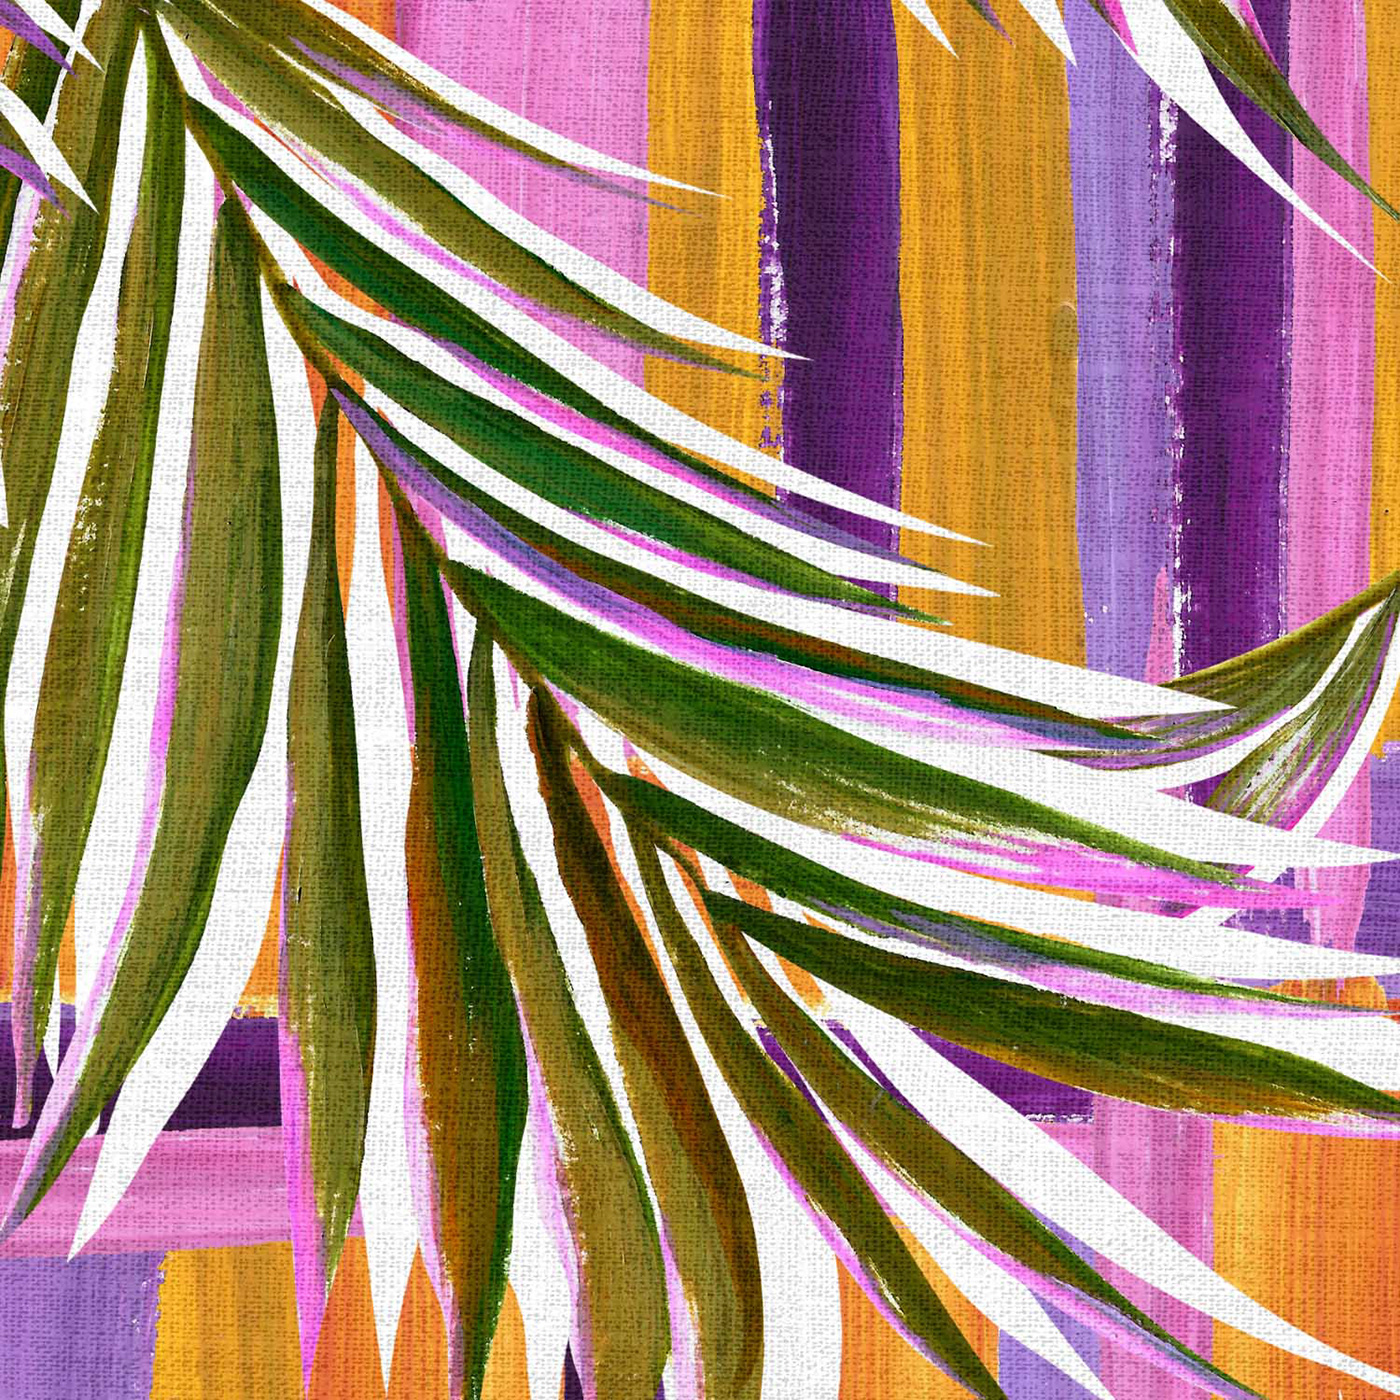 painting   Drawing  leaves pattern textile pattern design  Patterns geometric minimal modern